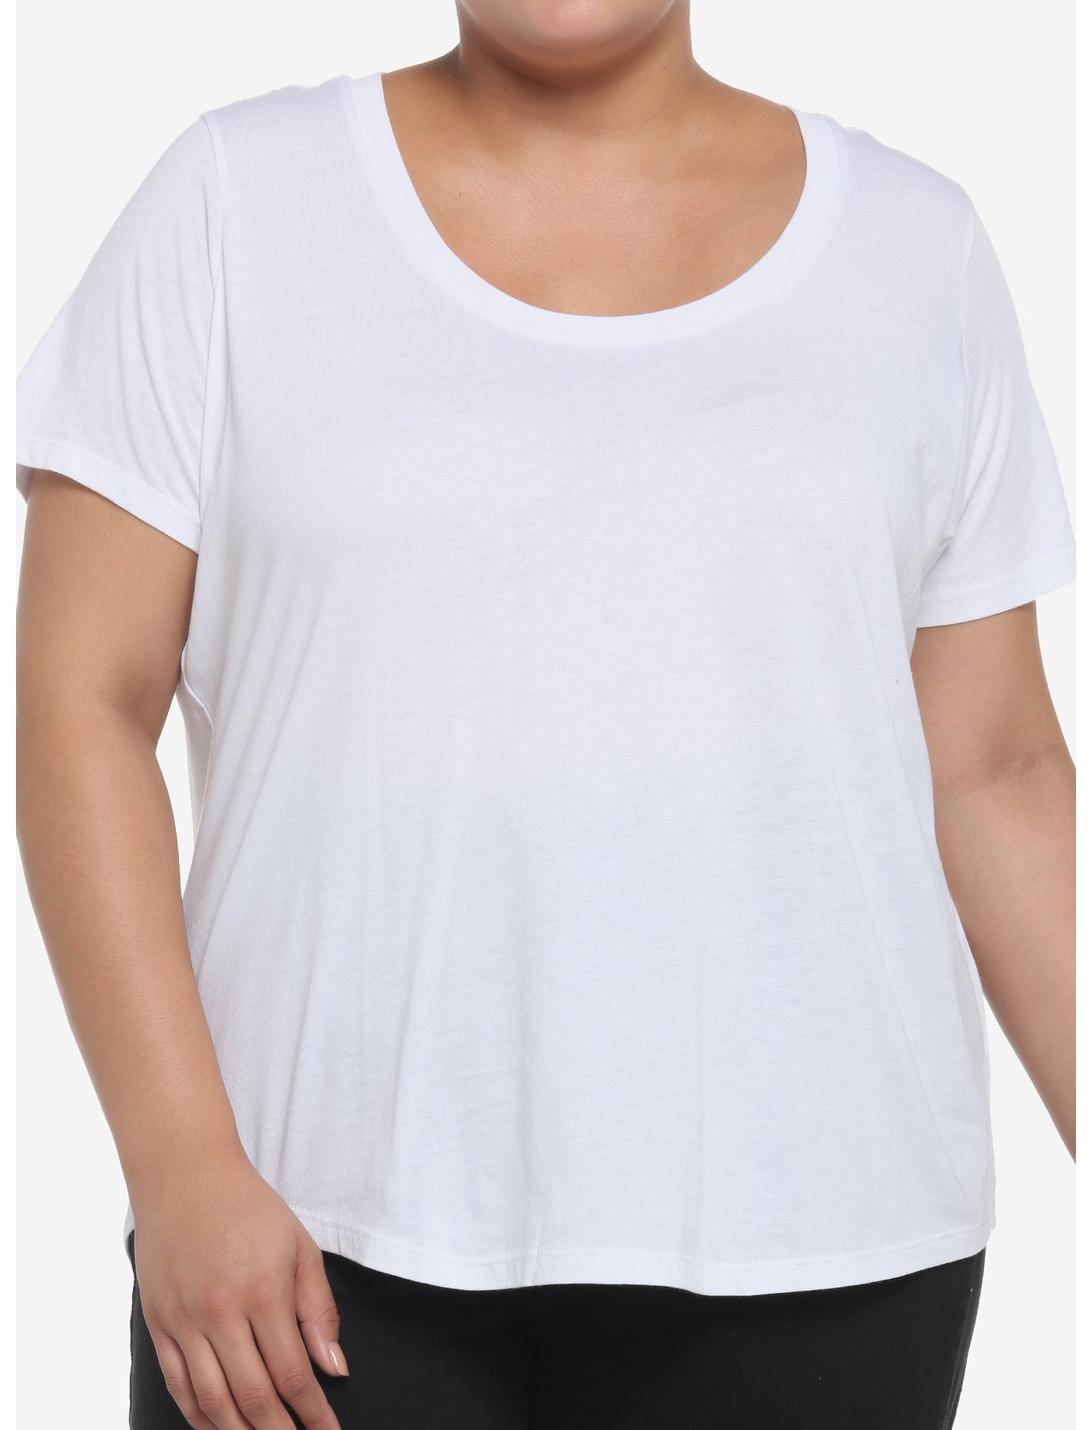 Her Universe White Scoop Neck Favorite T-Shirt Plus Size, CLOUD DANCER, hi-res